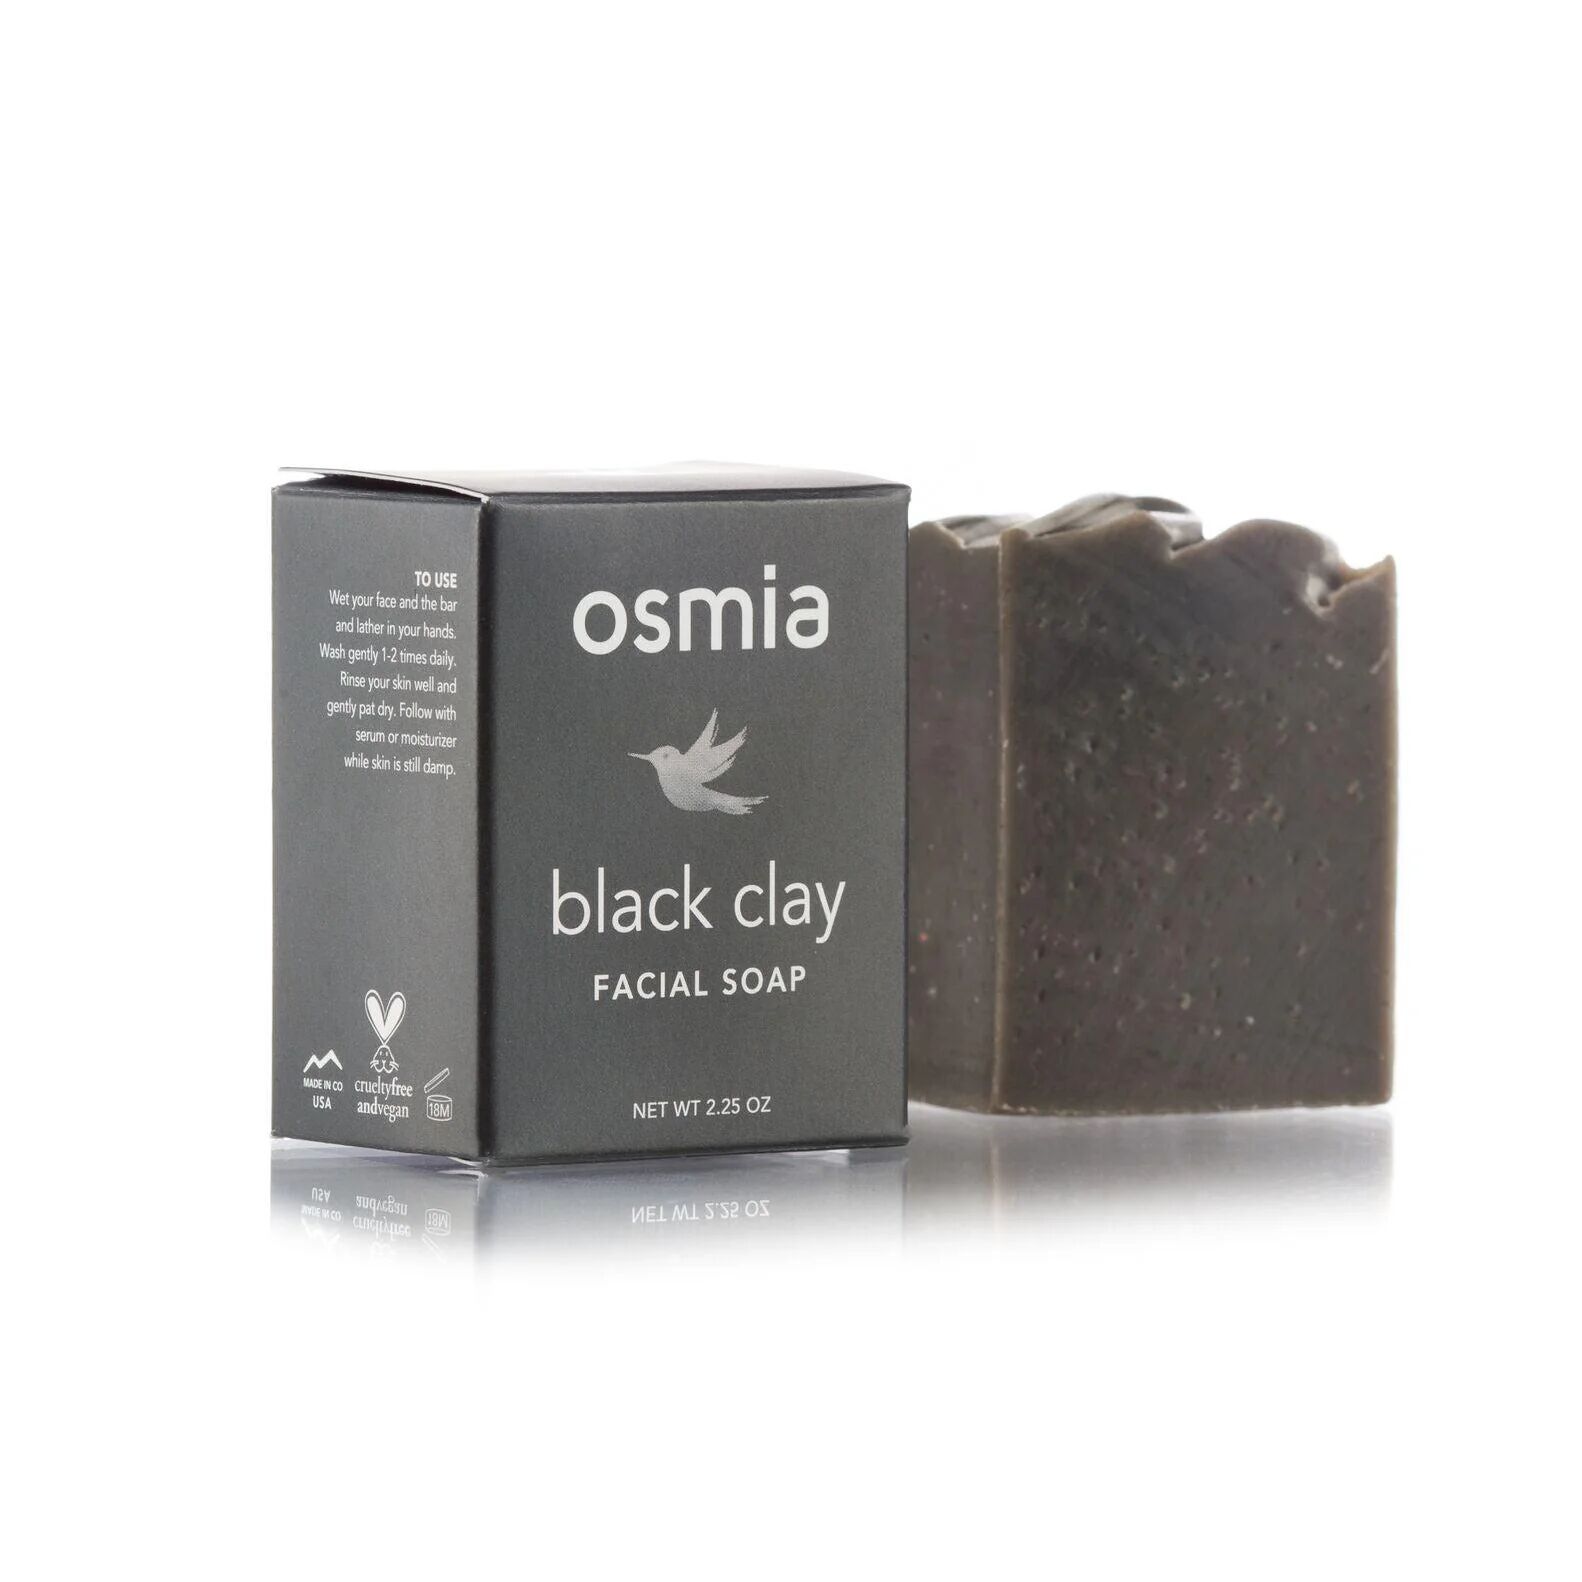 Osmia Black Clay Facial Soap